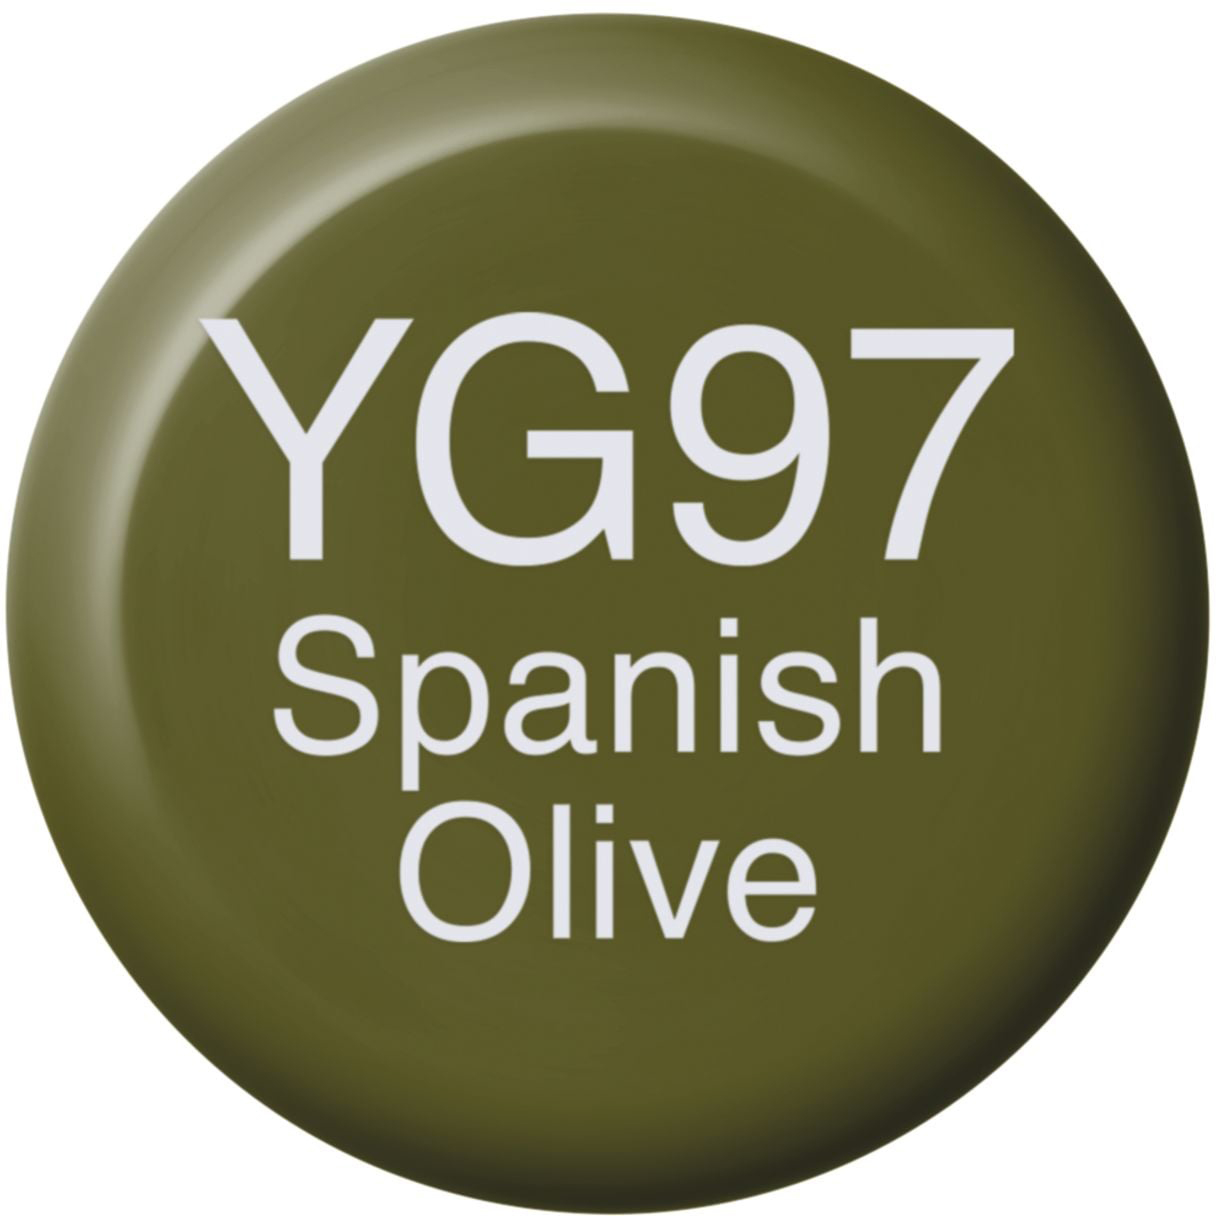 COPIC Ink Refill 2107659 YG97 - Spanish Olive YG97 - Spanish Olive